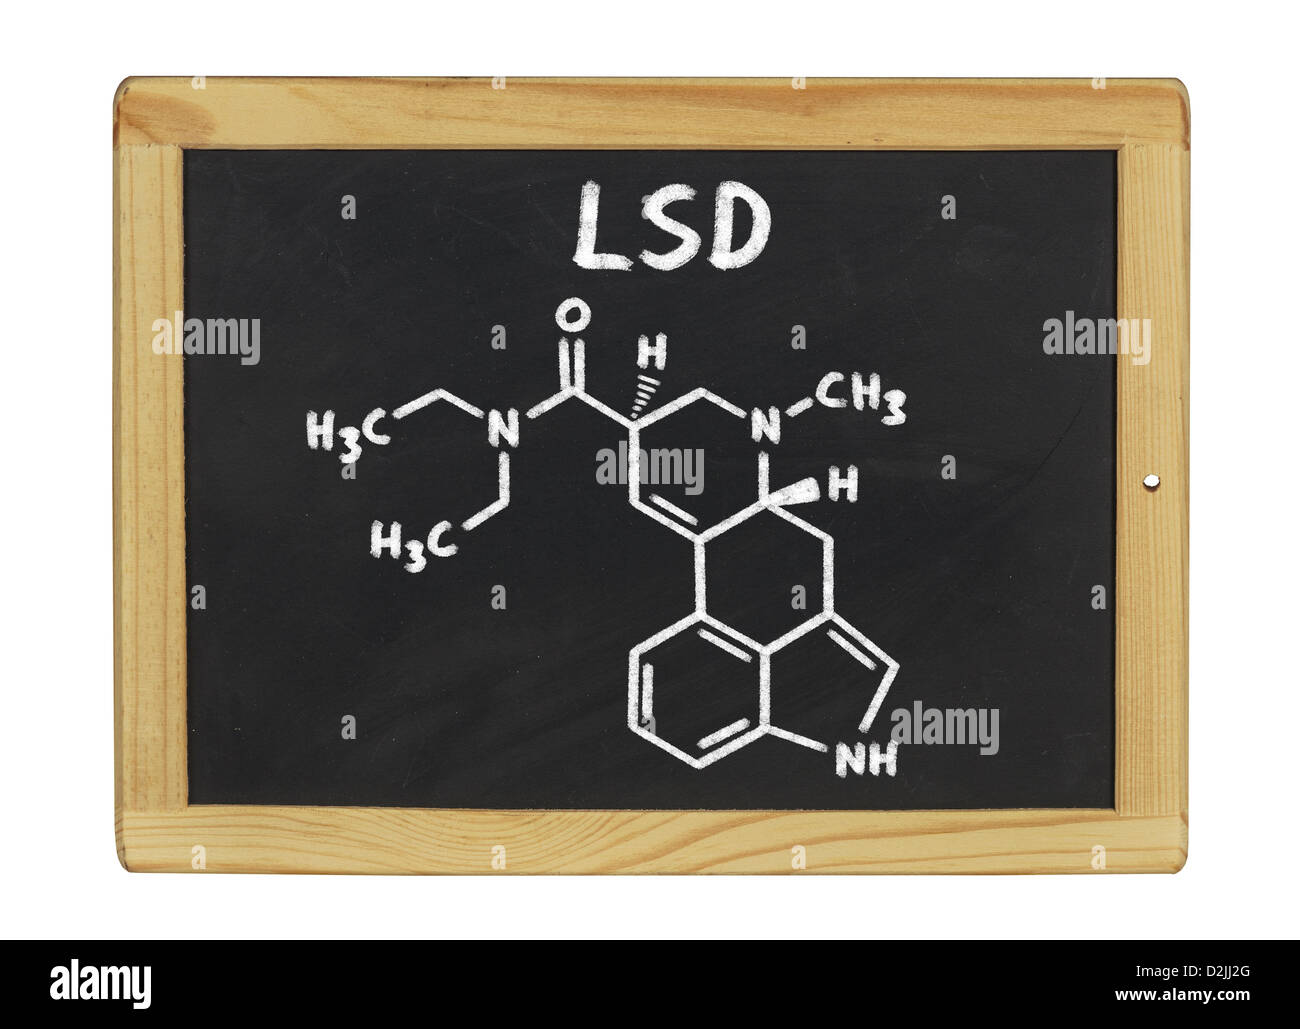 chemical formula of lsd on a blackboard Stock Photo